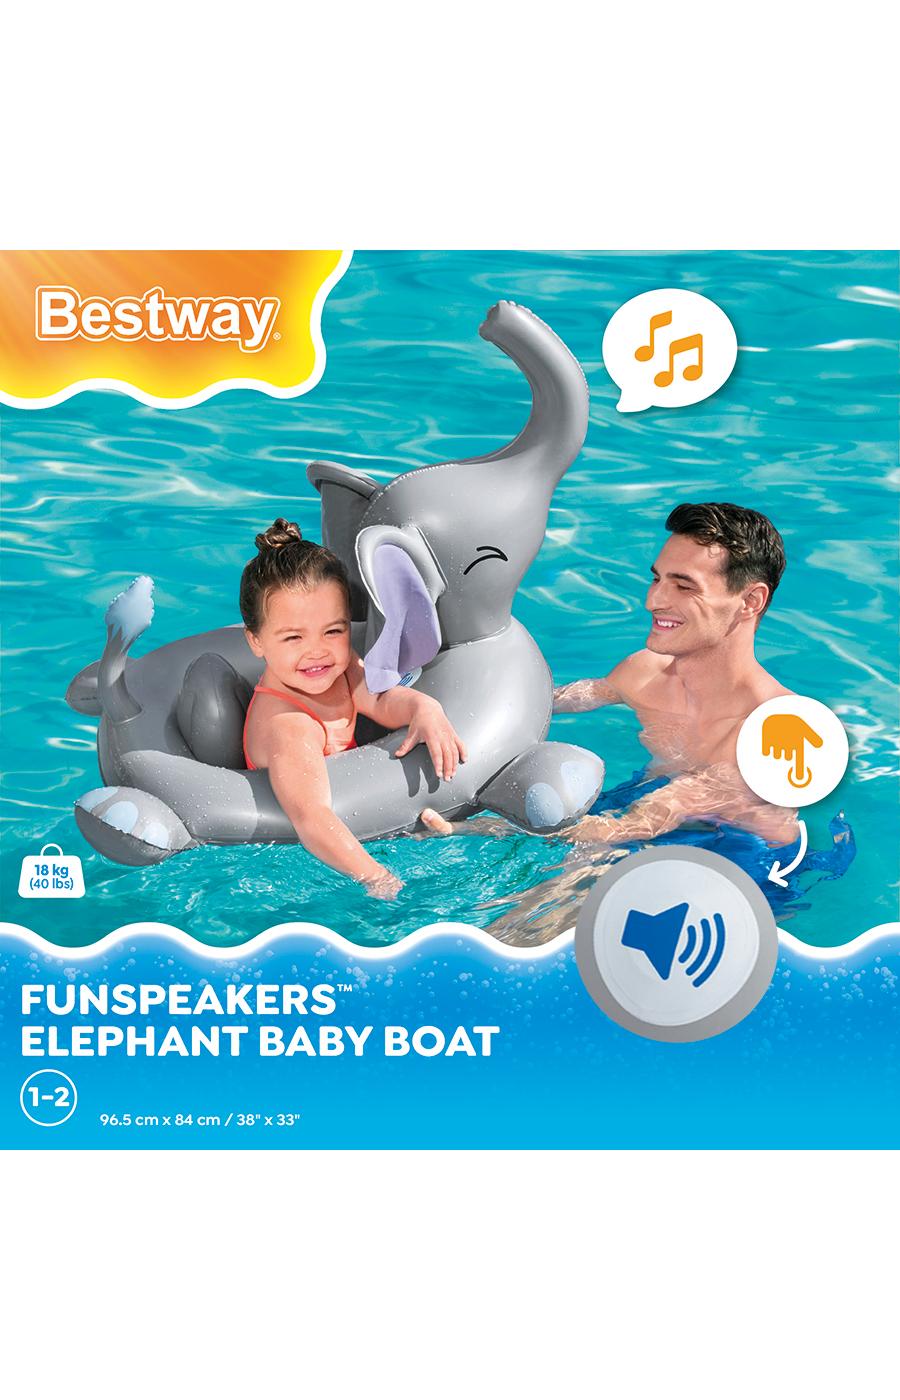 Bestway Funspeakers Elephant Baby Boat; image 1 of 4